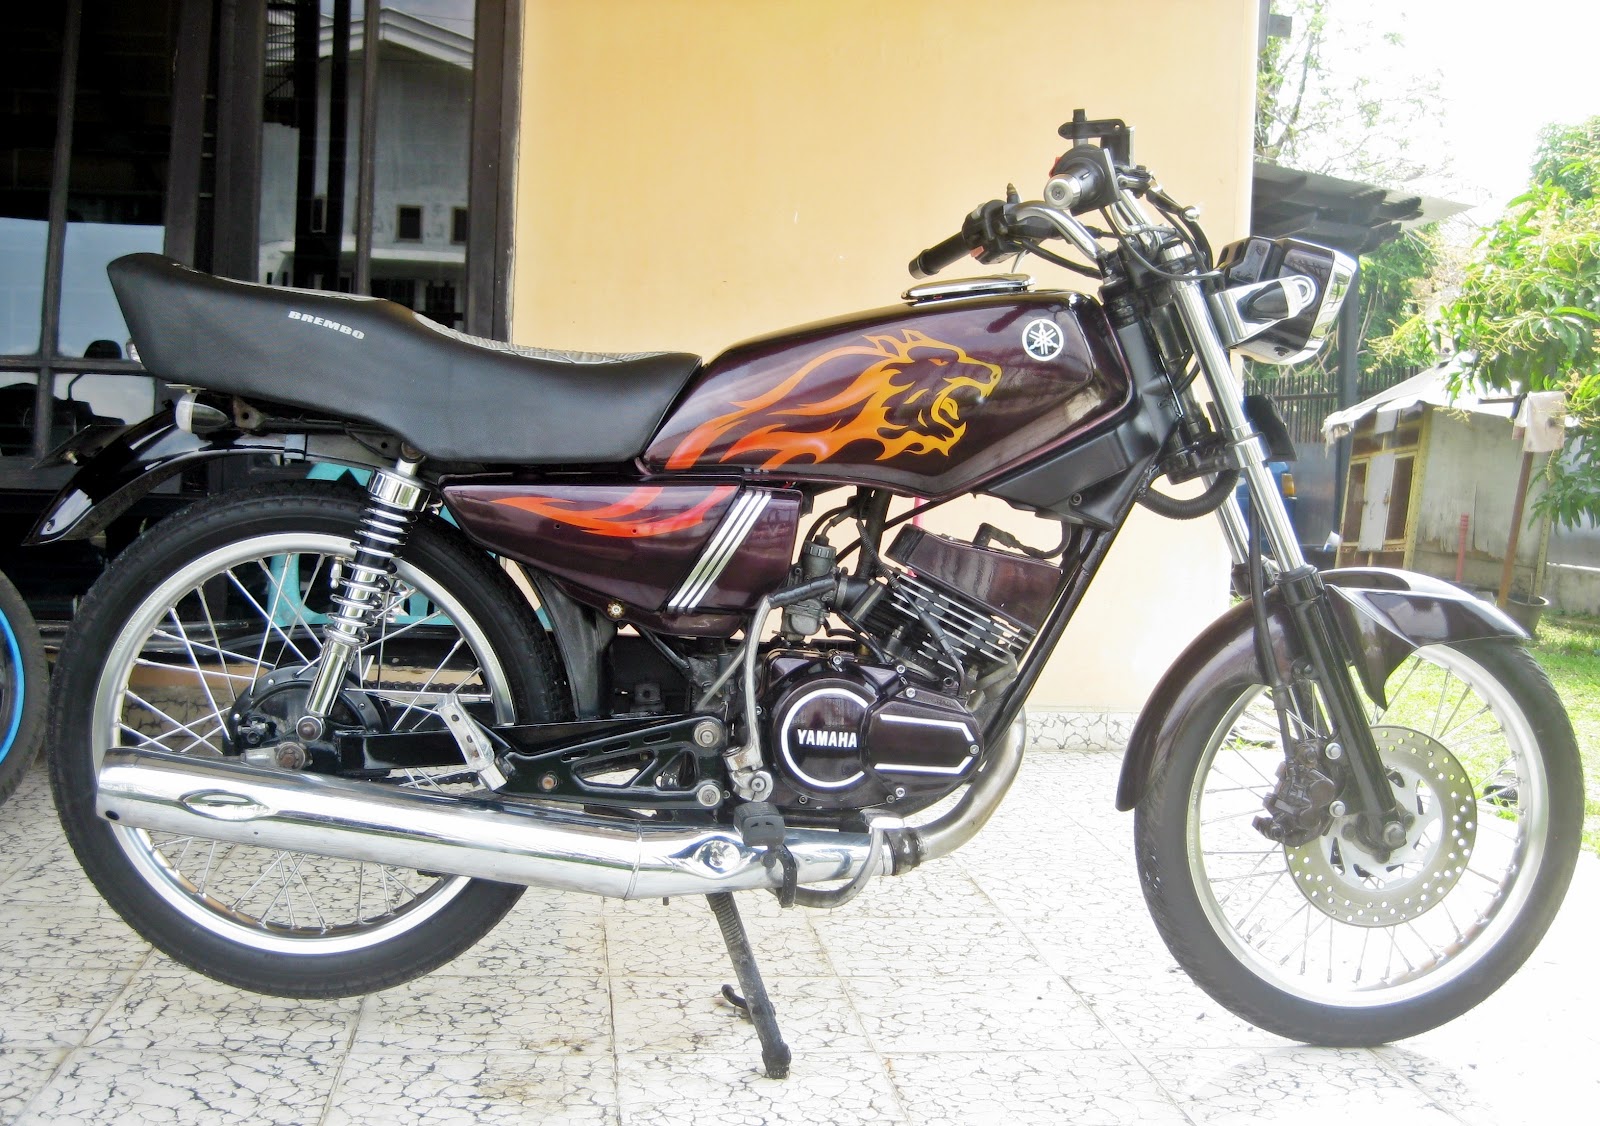  Harga  Sepeda Motor  Rx  King  Terkini Online